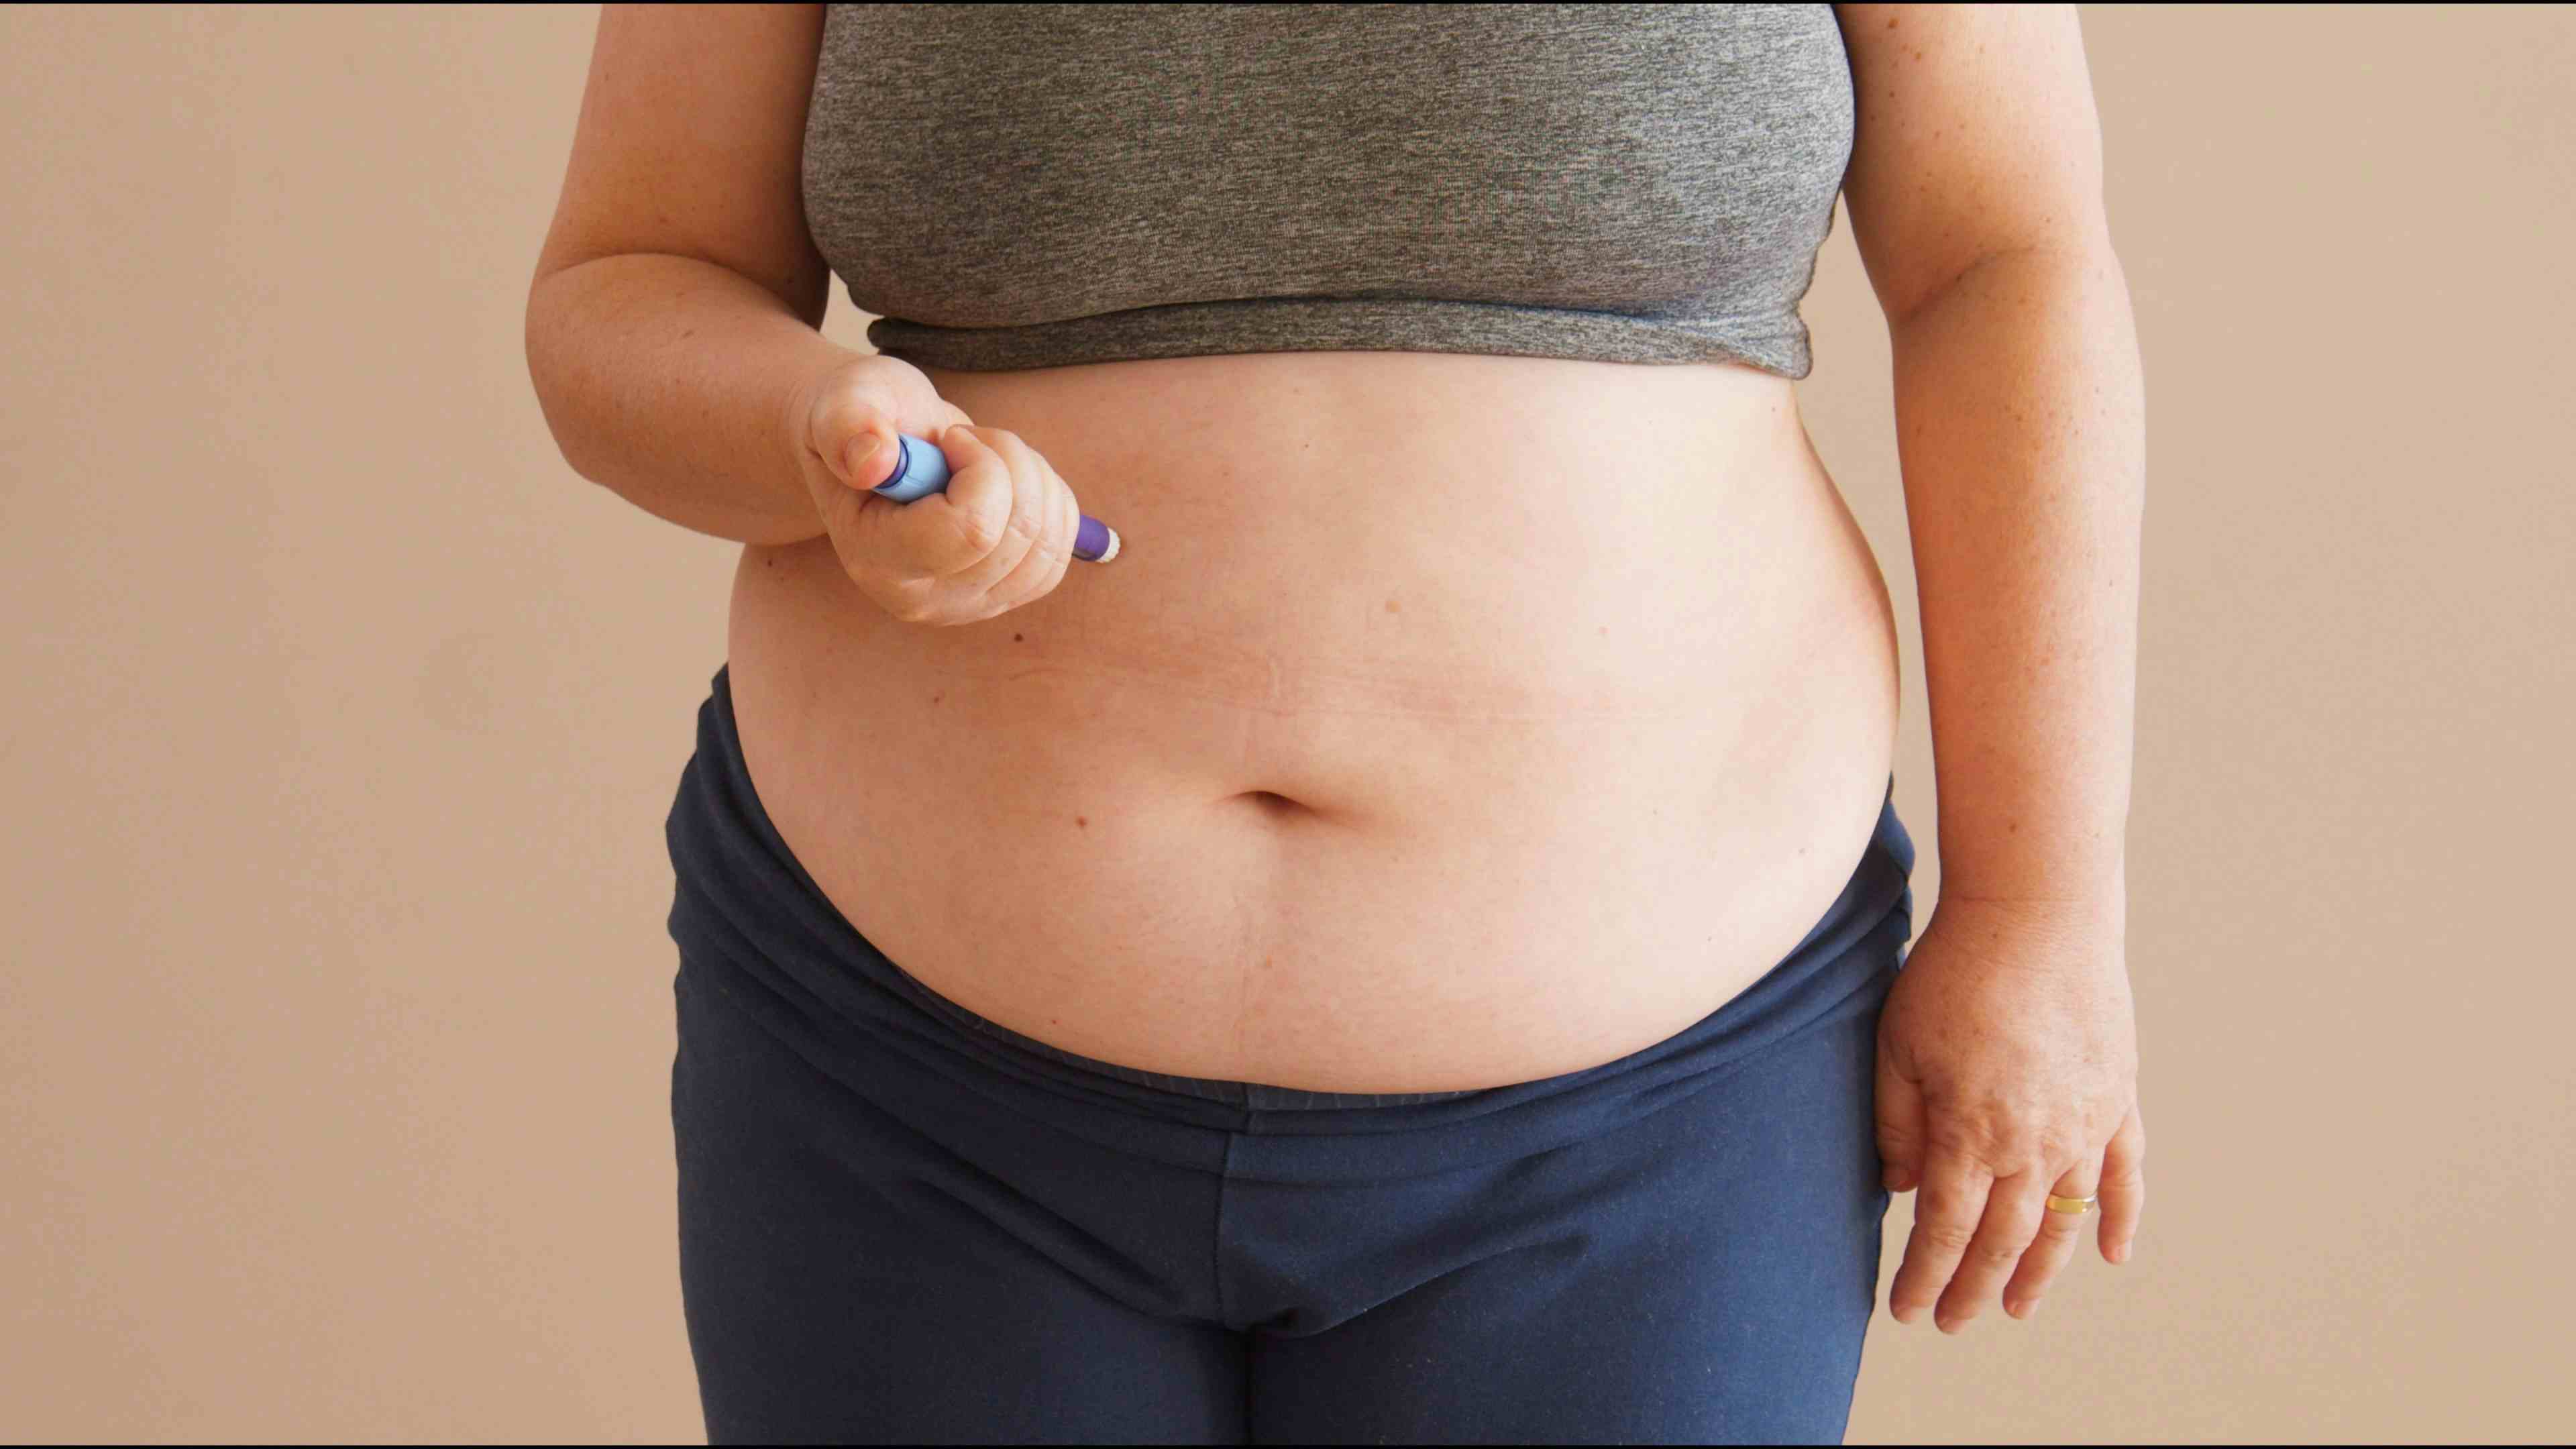 Women applying weight loss medication | Image credit: Mauricio - stock.adobe.com 